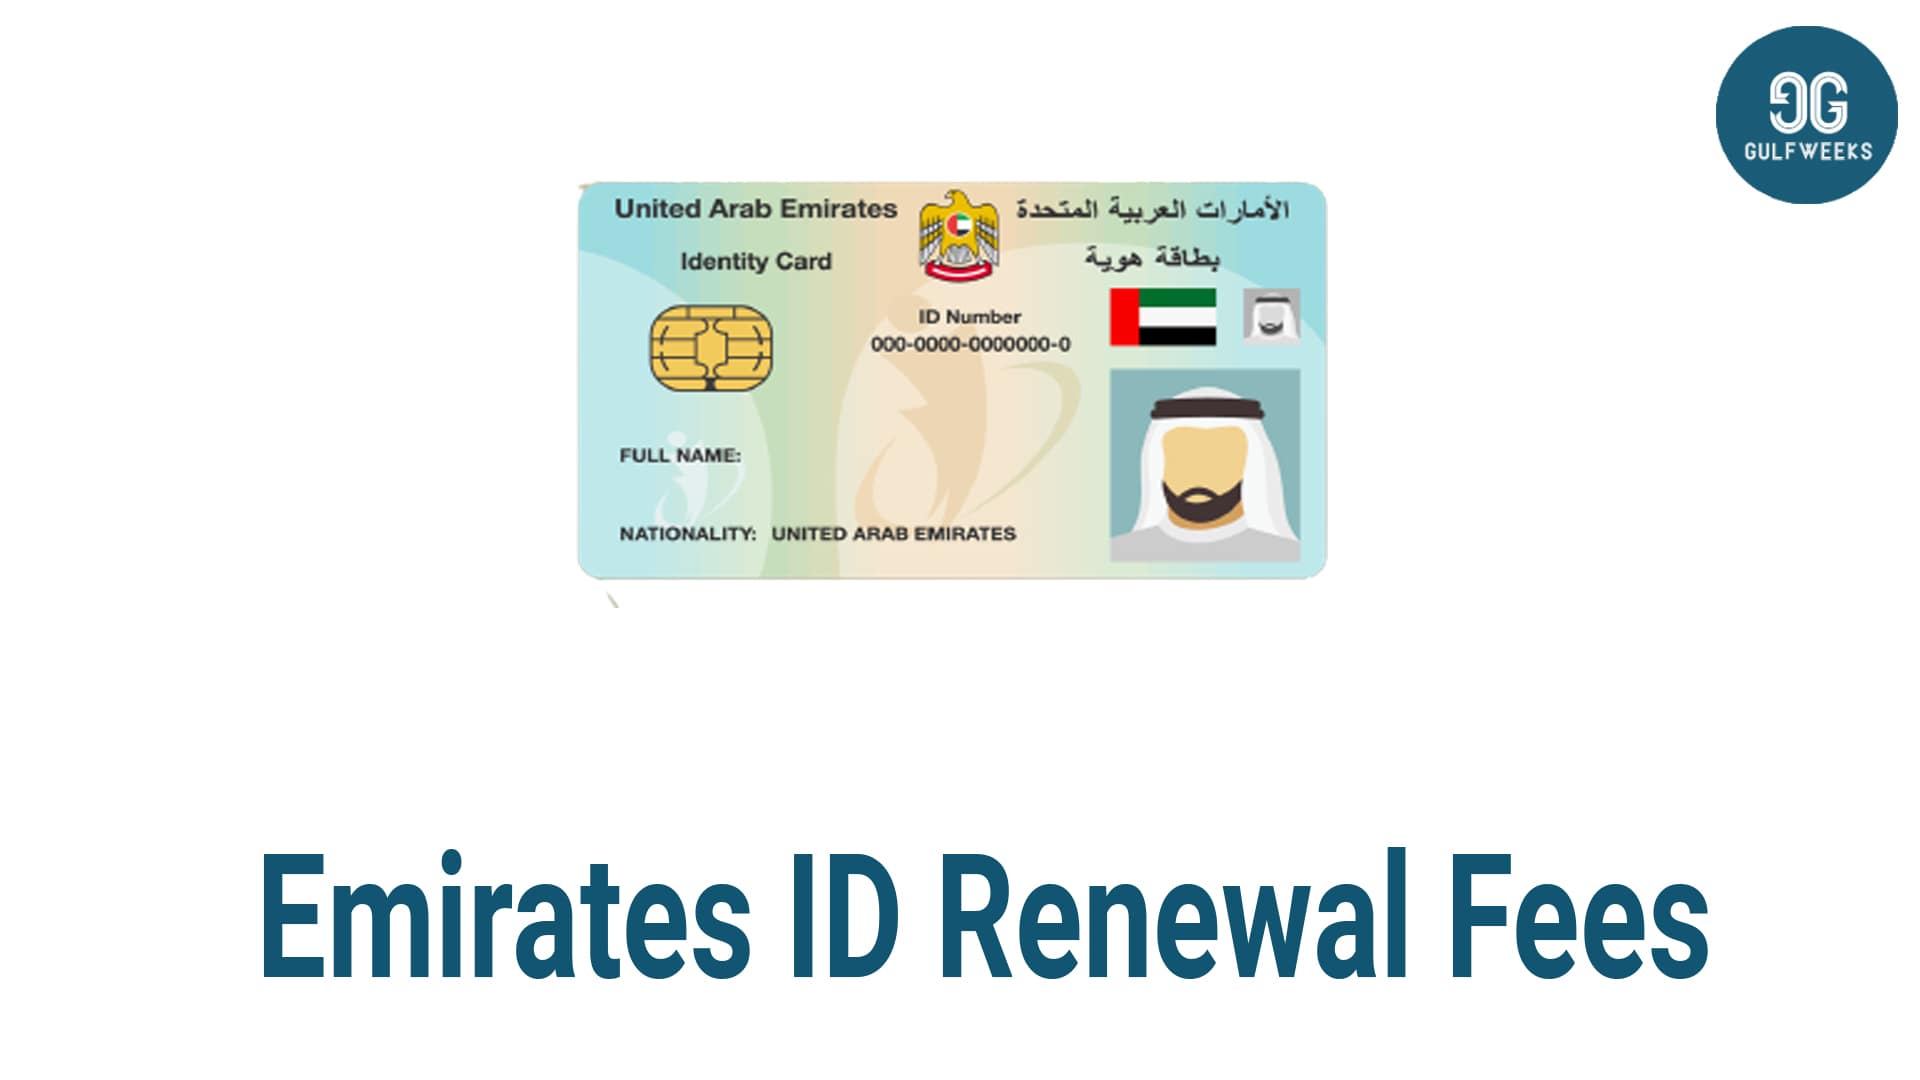 Emirates ID Renewal Fees